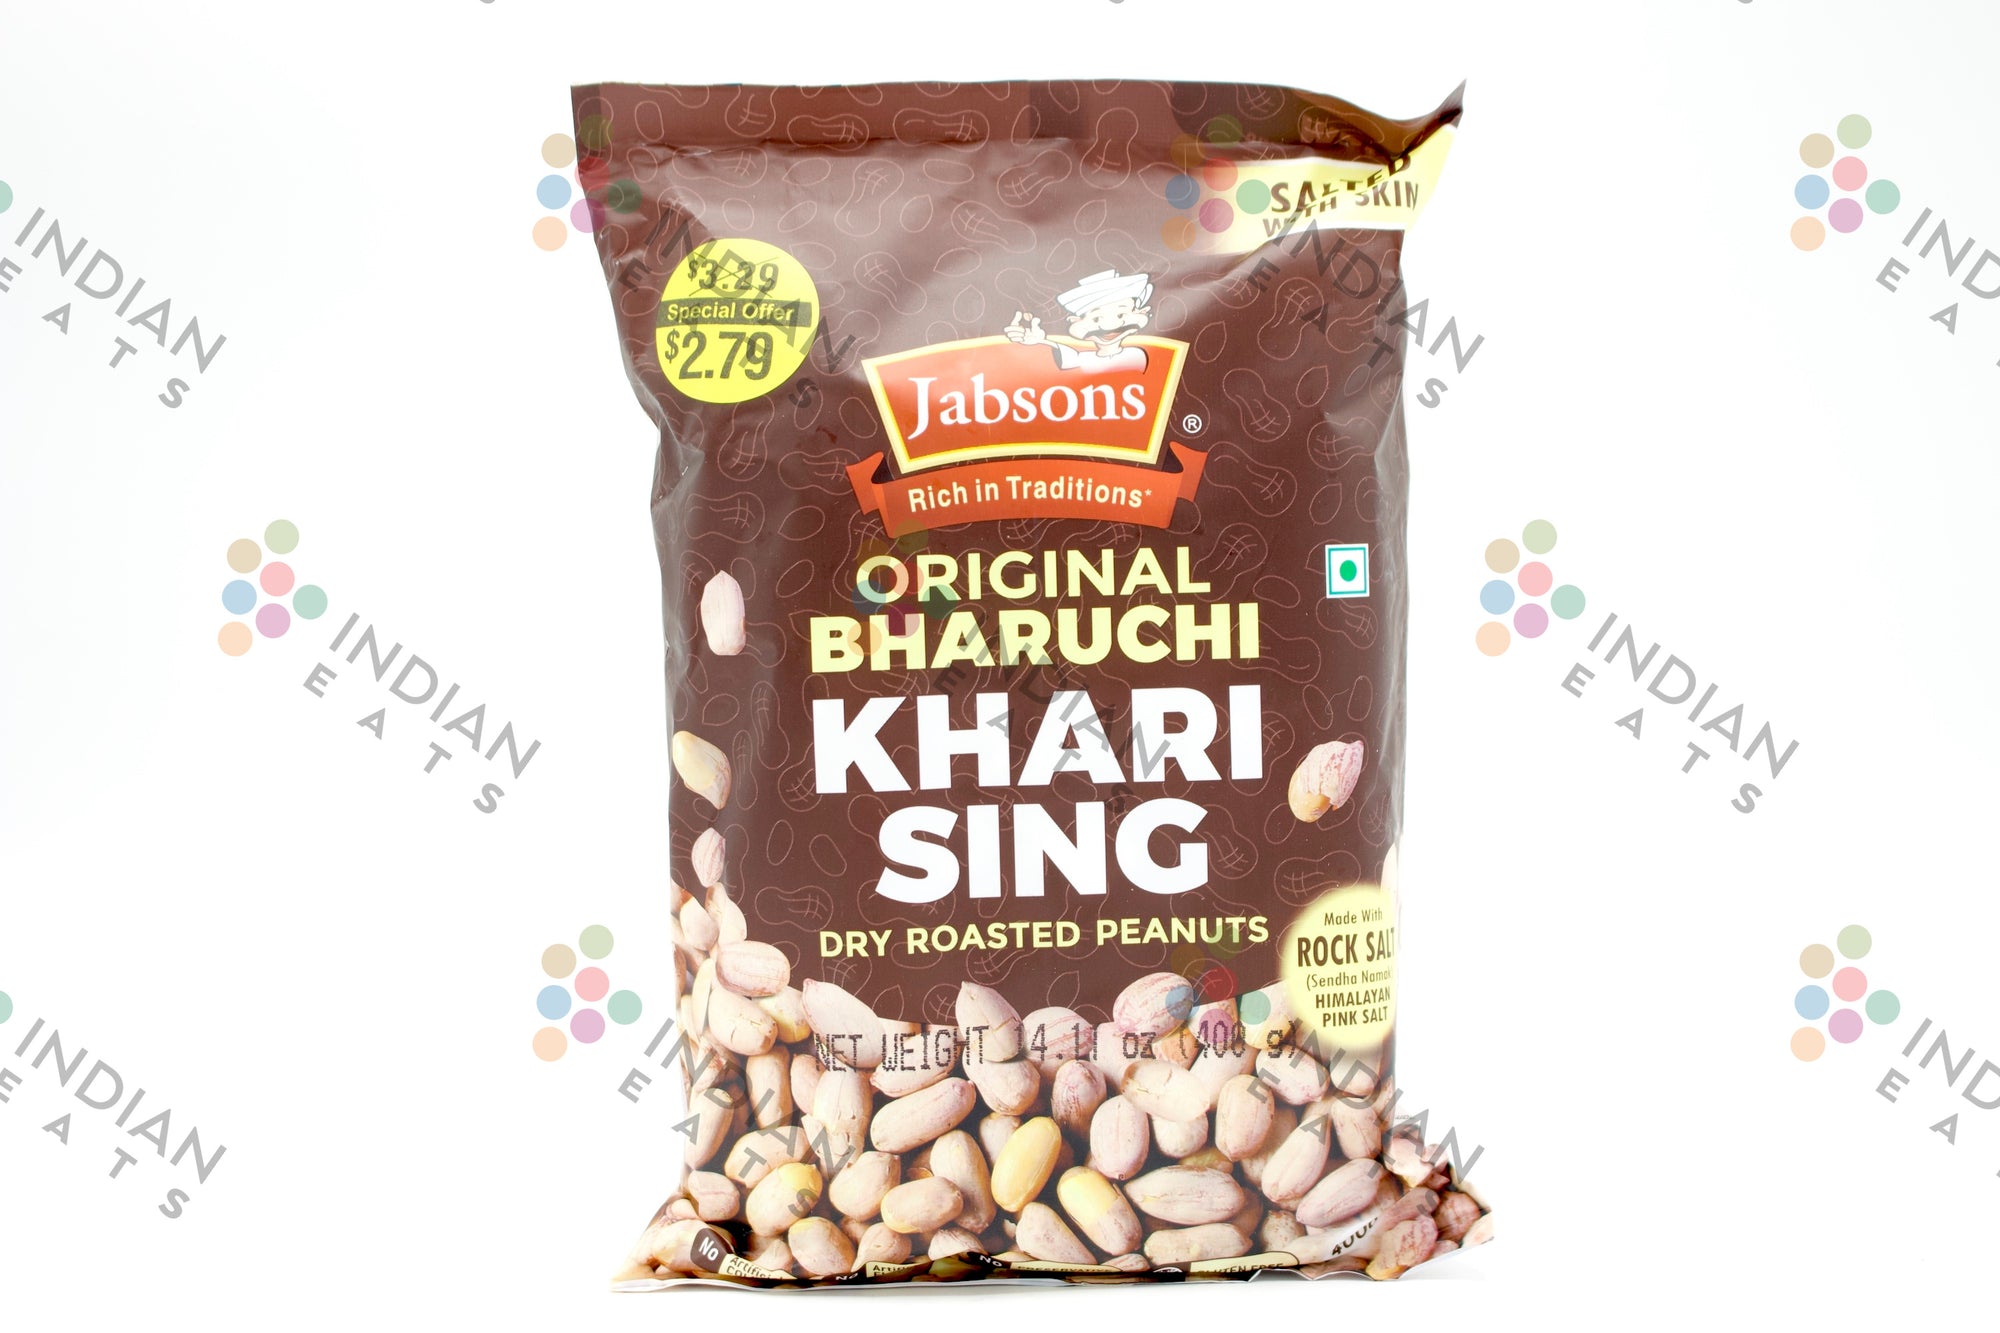 Jabsons Original Bharuchi Khari Sing Dry Roasted Peanuts